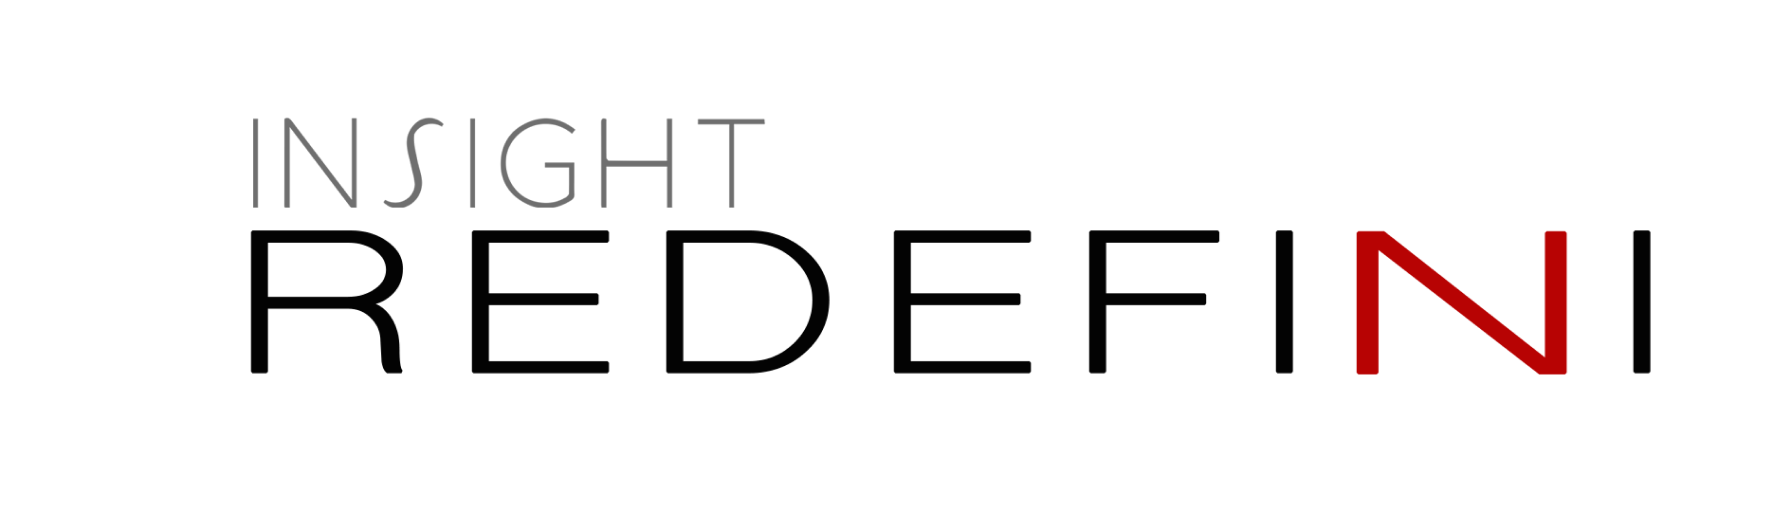 Insight redefini logo